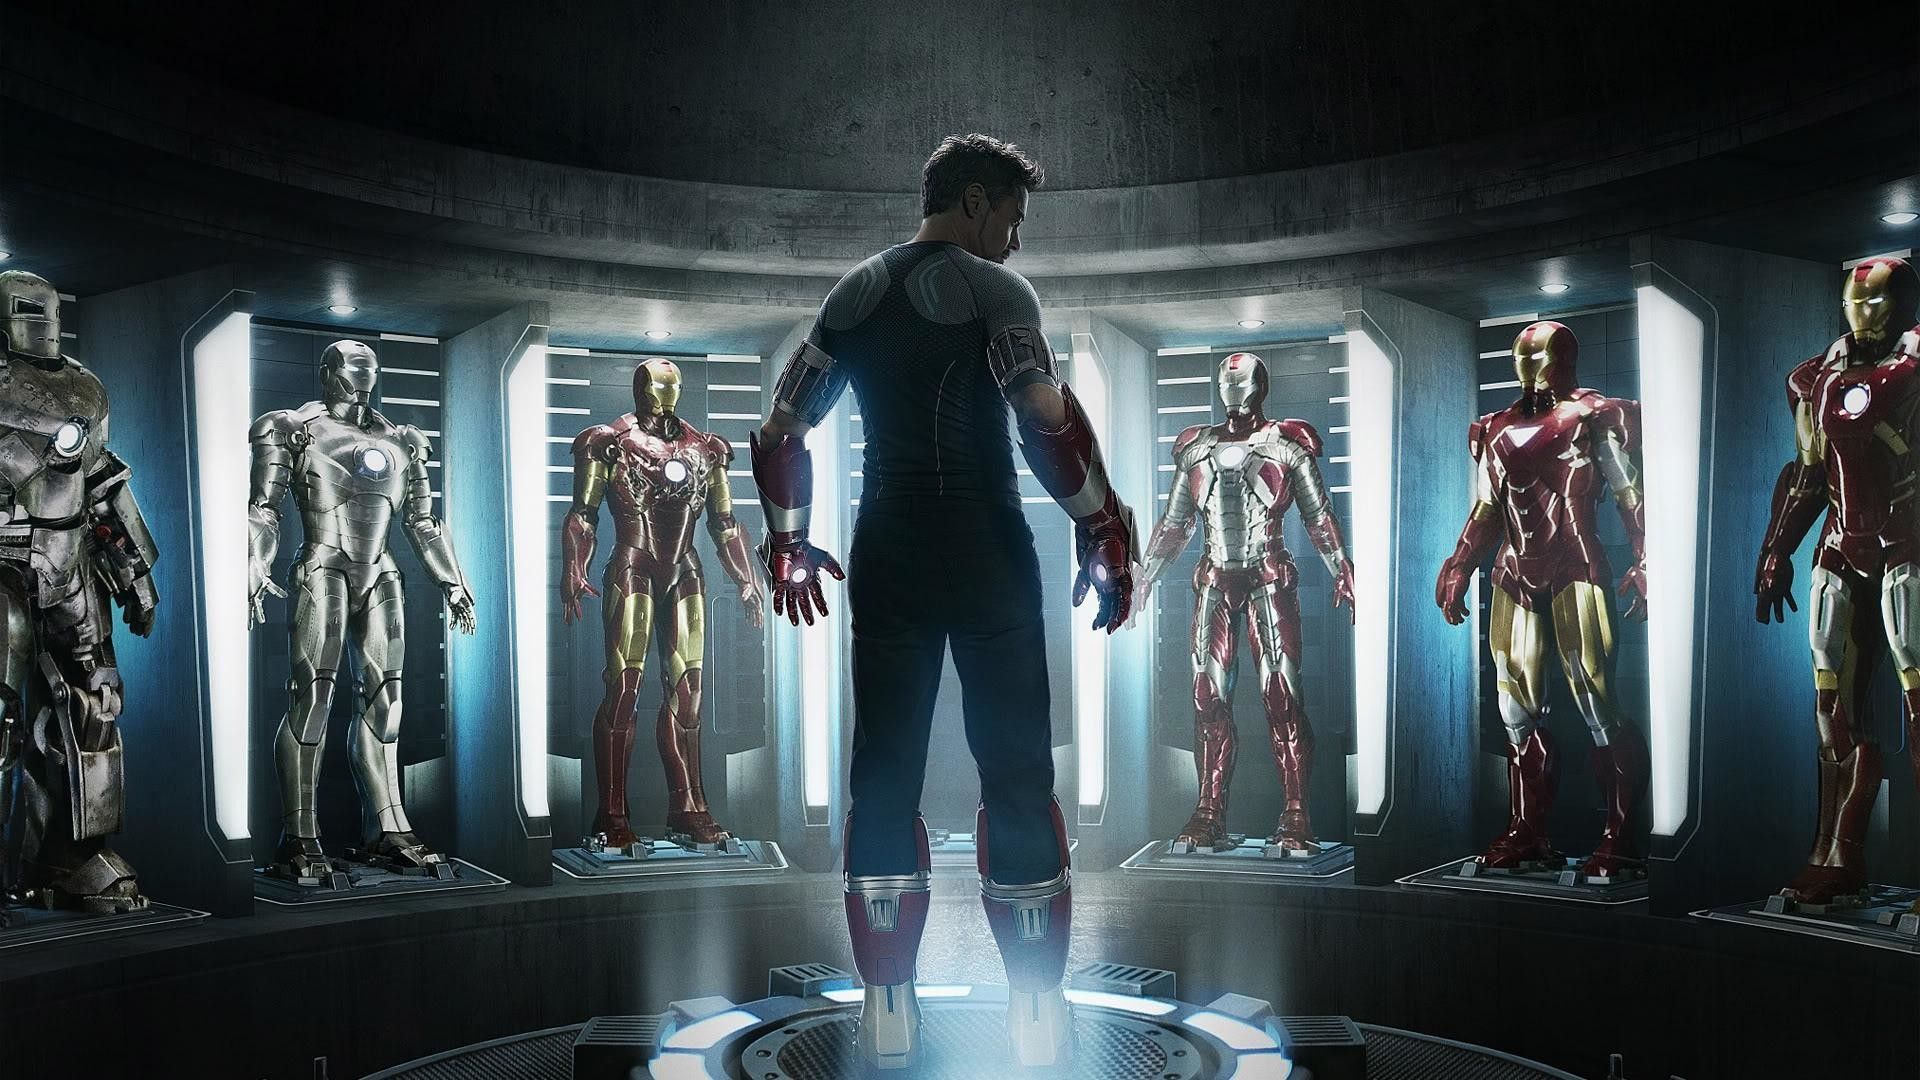 Hd 3D 1080p Wallpaper Avengers Endgame Iron Man Hall Of